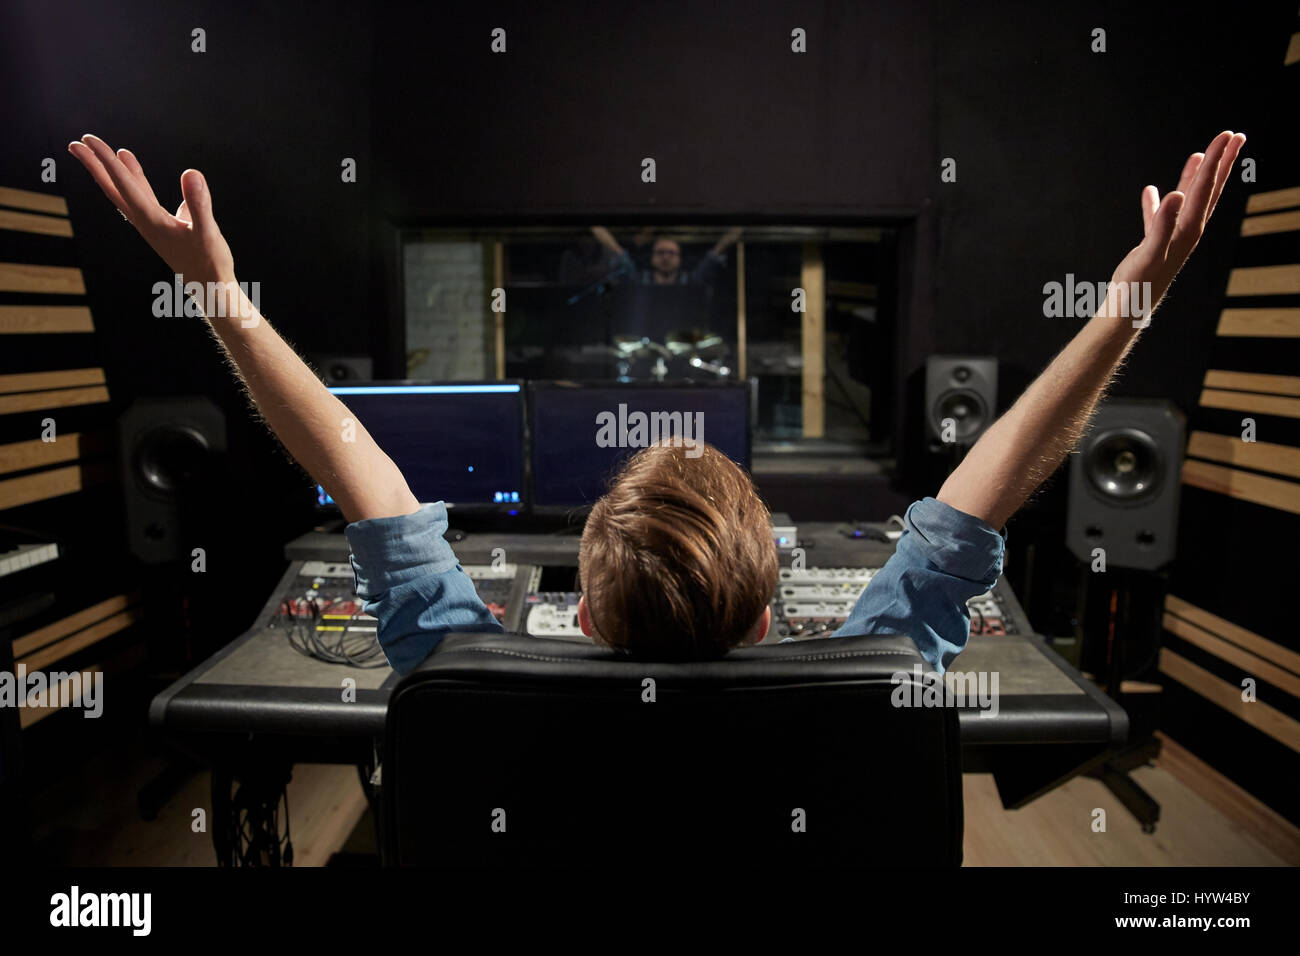 Man a console di miscelazione in music studio di registrazione Foto Stock